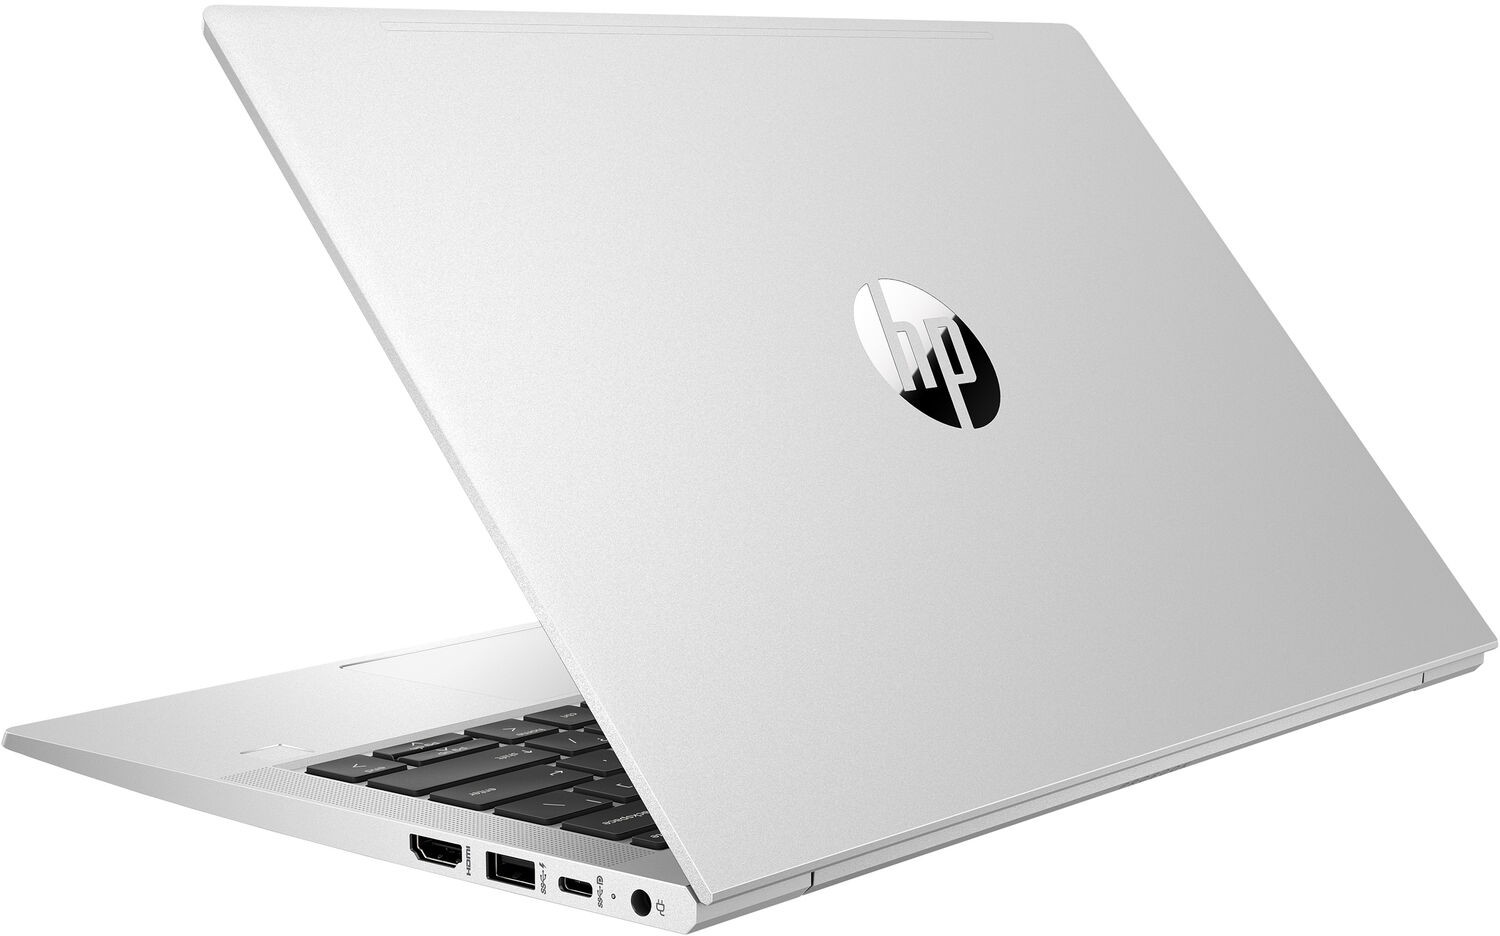 Ноутбук HP НP ProBook 430 G8 Core i5-1135G7 2.4GHz, 13.3 FHD (1920x1080) AG 8GB DDR4 (1),256GB SSD,45Wh LL,Service Door,FPR,1.5kg,1y,Silver,DOS-39392